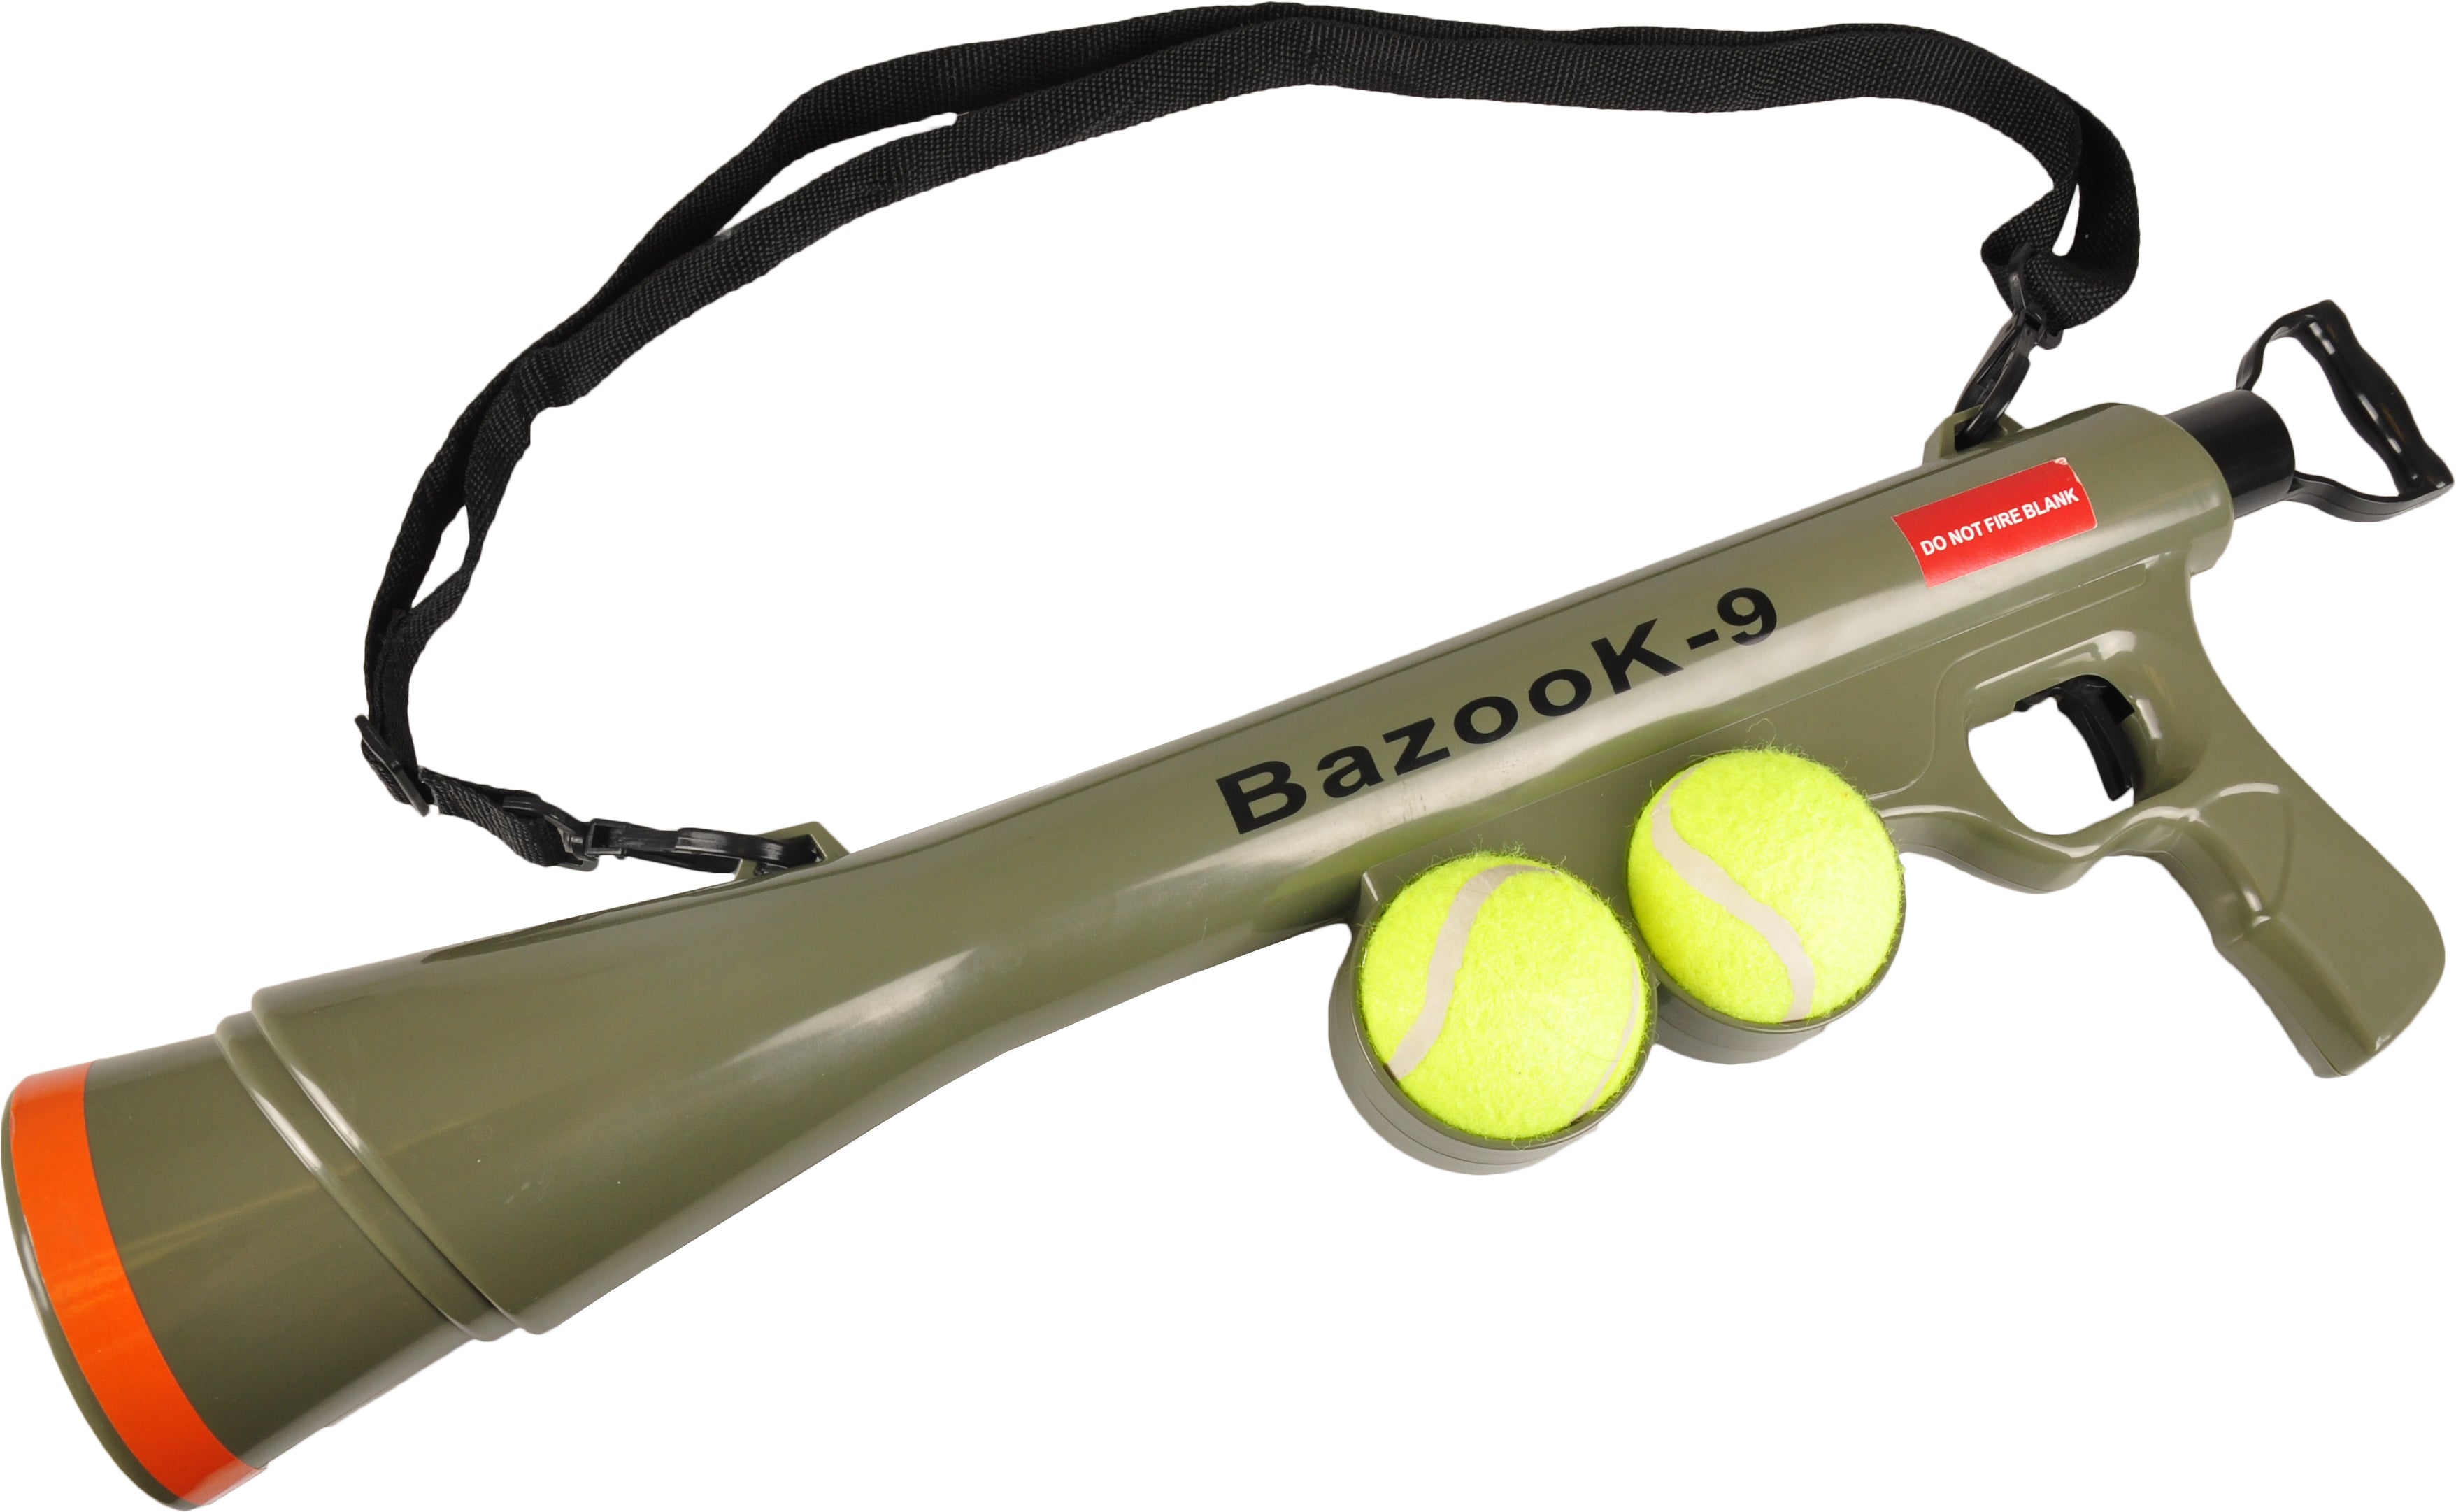 Interactief Bazooka 9 Shooter + 2 Tennisballen - Huisdierplezier